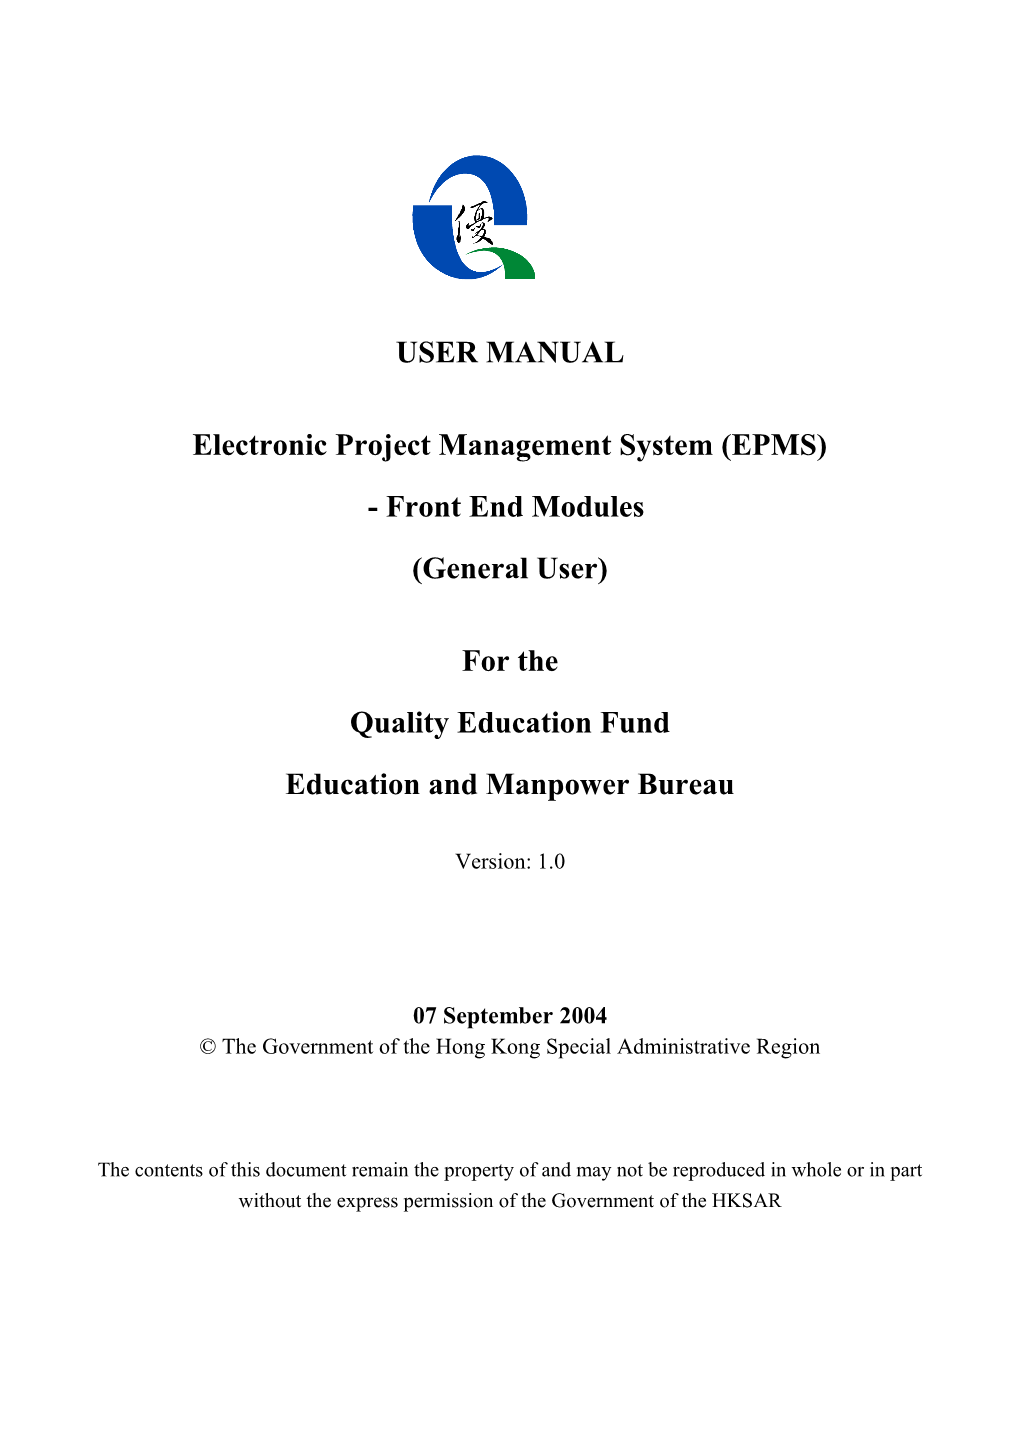 User Manual on EPMS